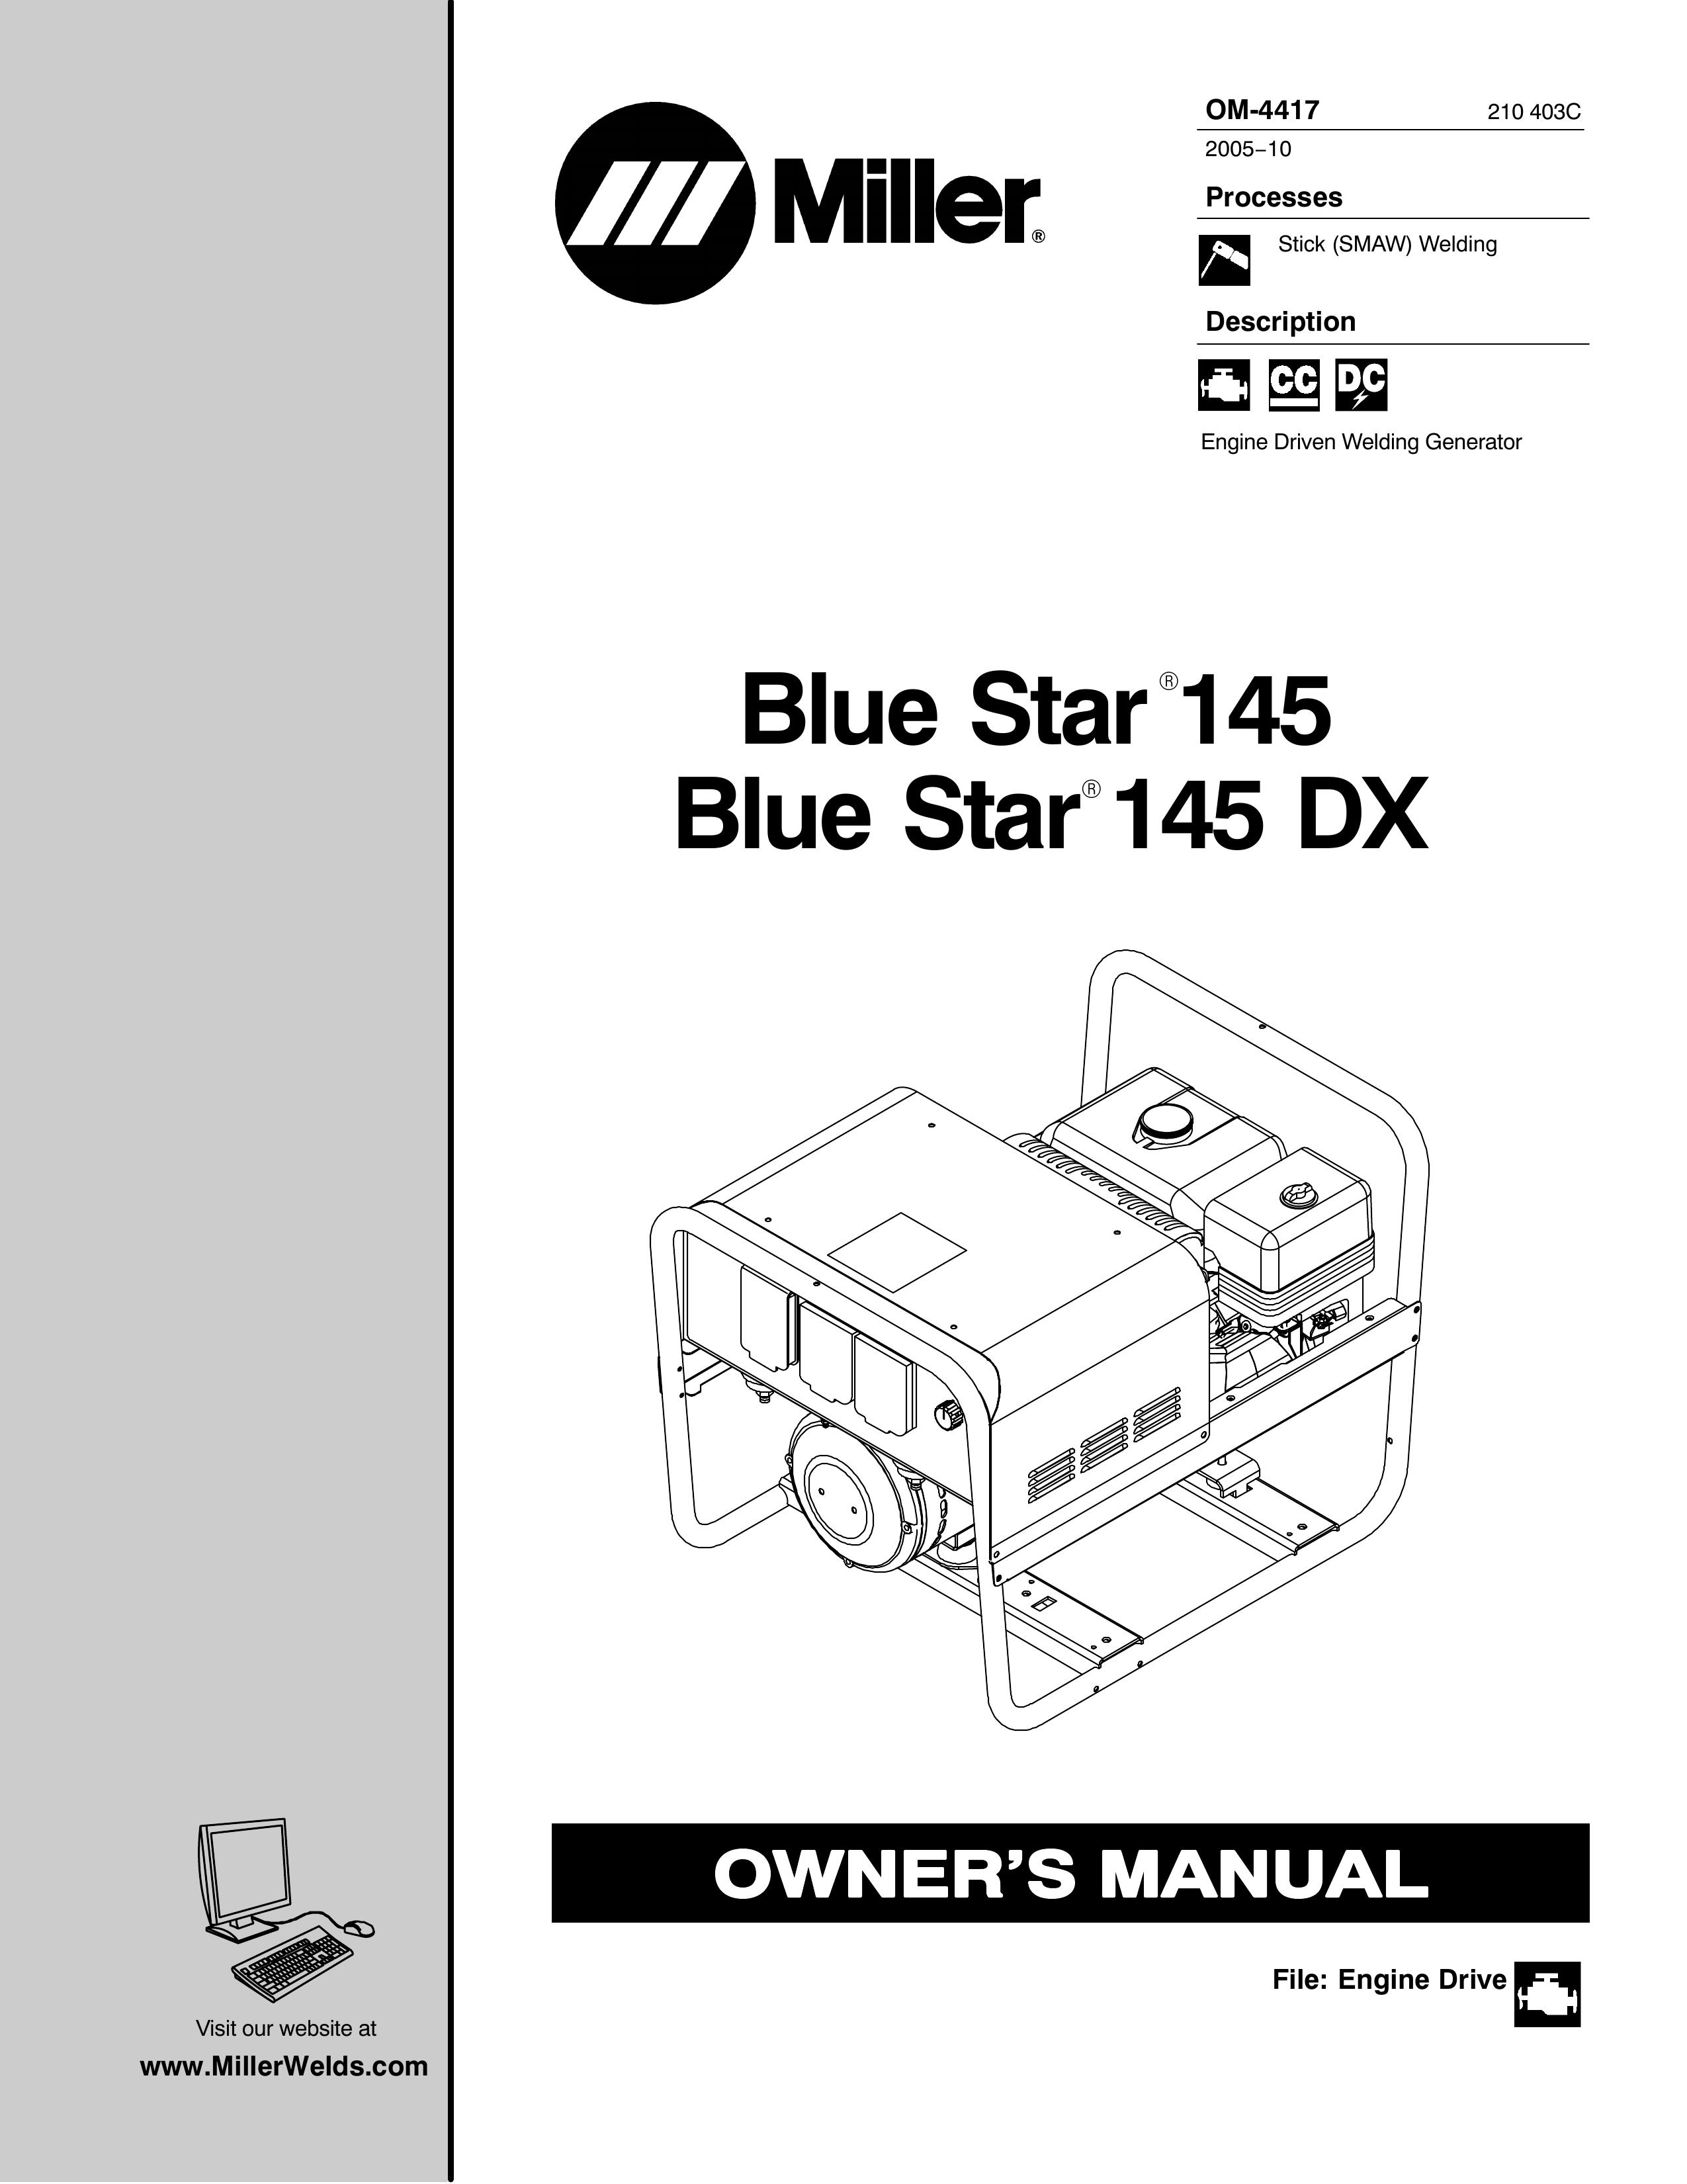 Miller Electric 145 DX Portable Generator User Manual